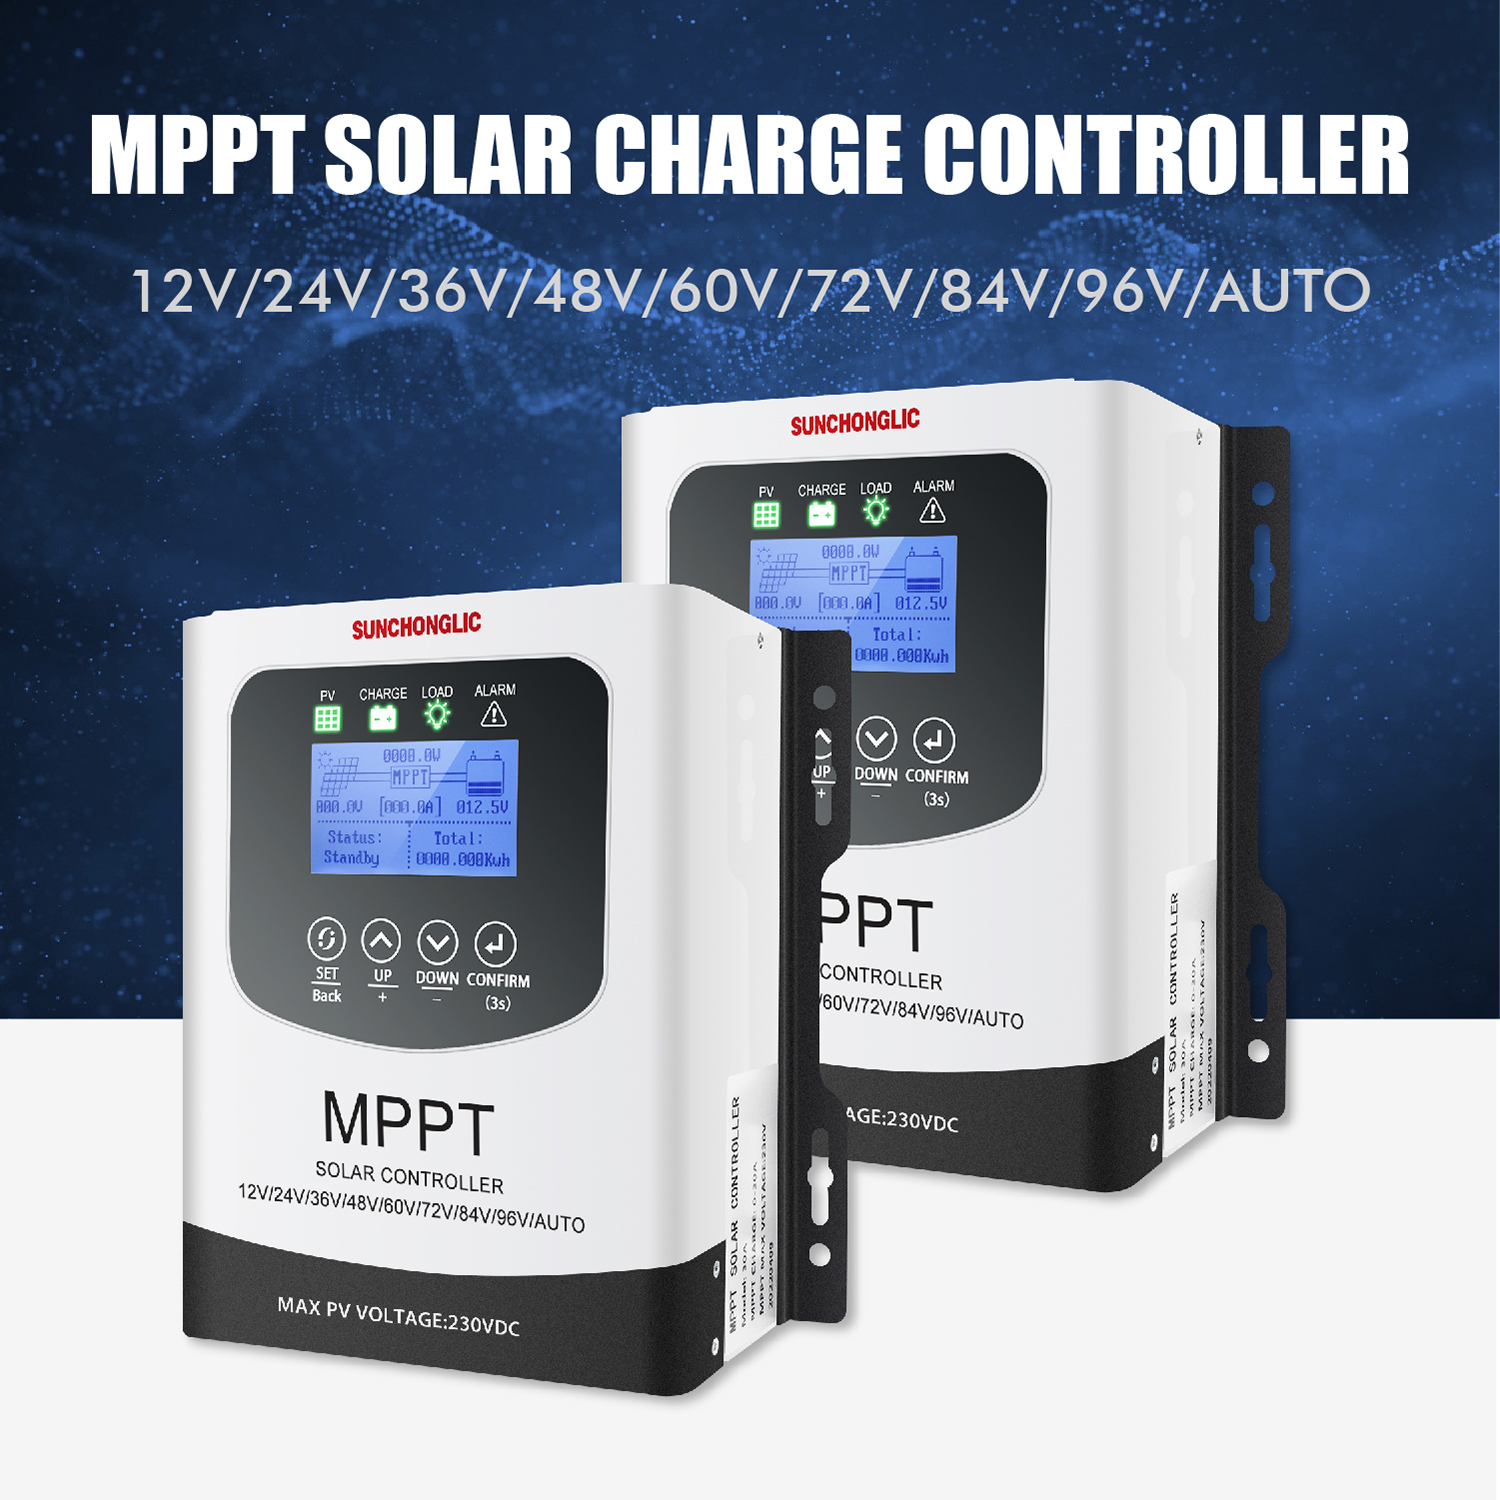 Sunchonglic solar charge controller 12V 24V 36V 48V 60V 72V 84V 96V 30A MPPT solar charger controller